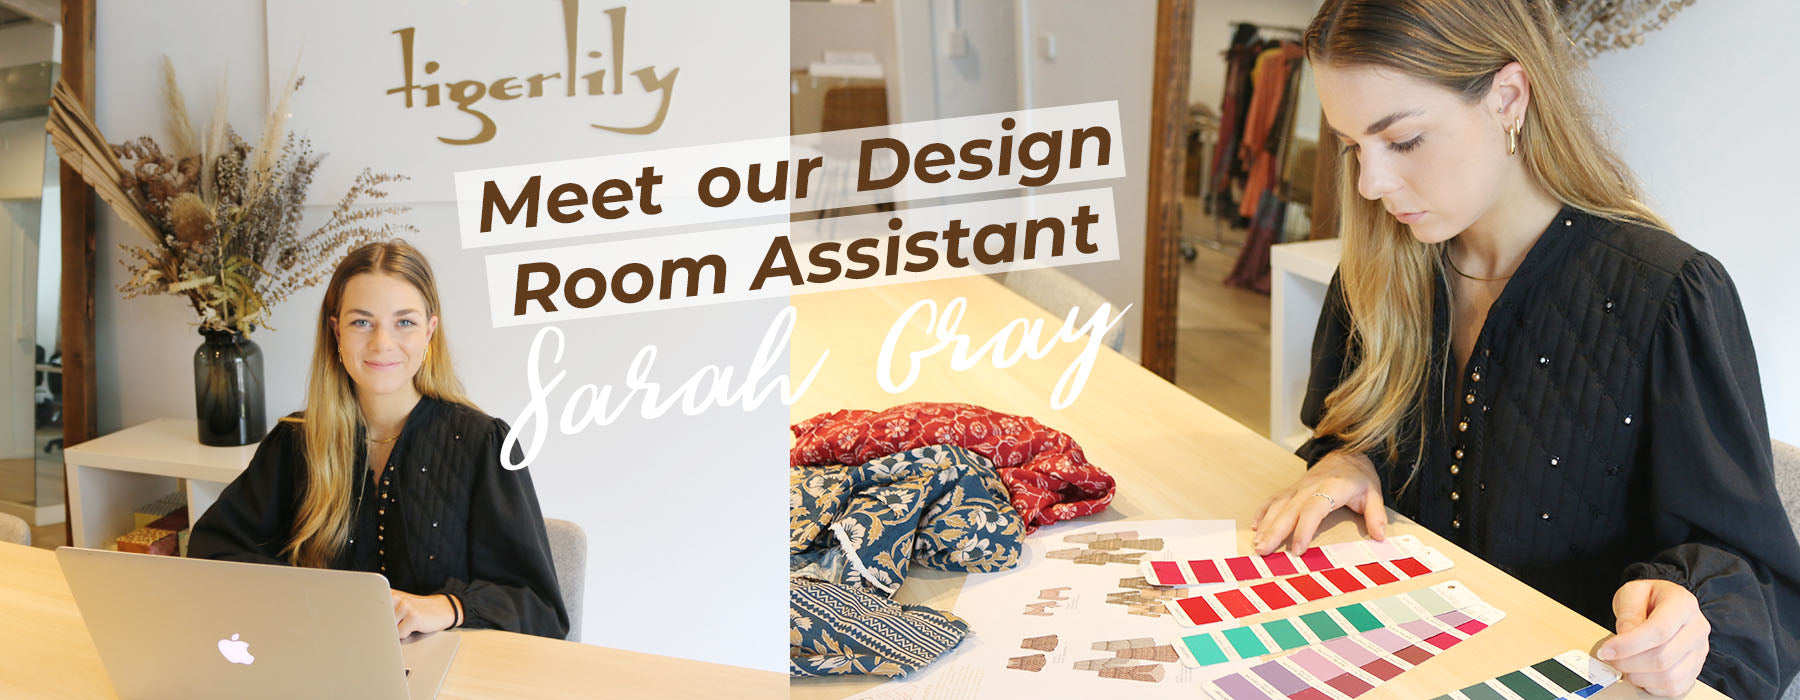 Meet Our Design Room Assistant